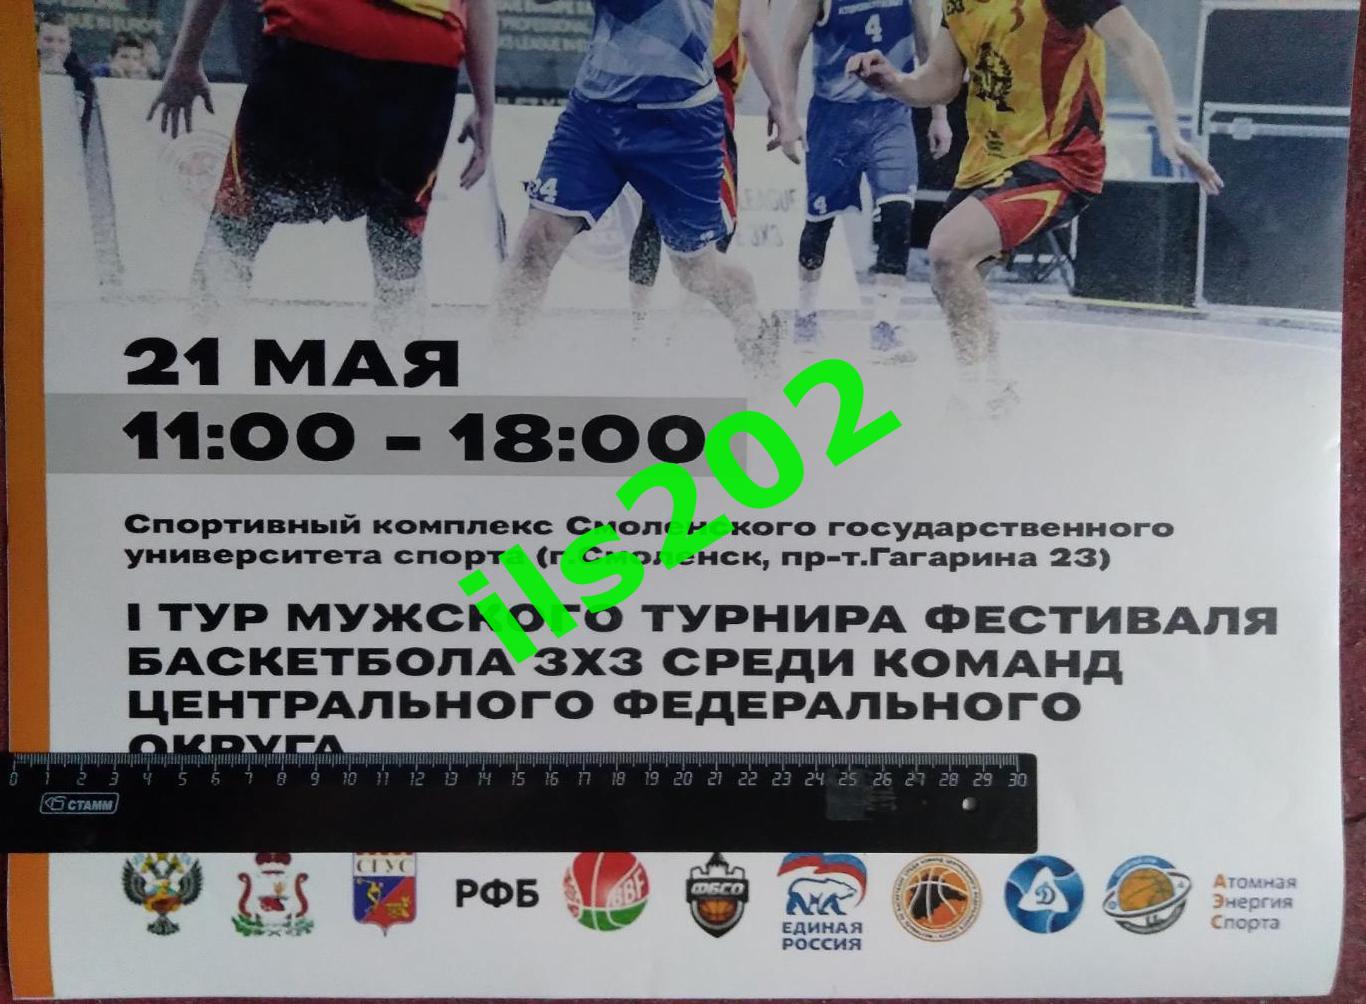 баскетбол 3х3 Смоленск 21 мая 2022 турнир фестиваль ЦФО / участники в описании 1